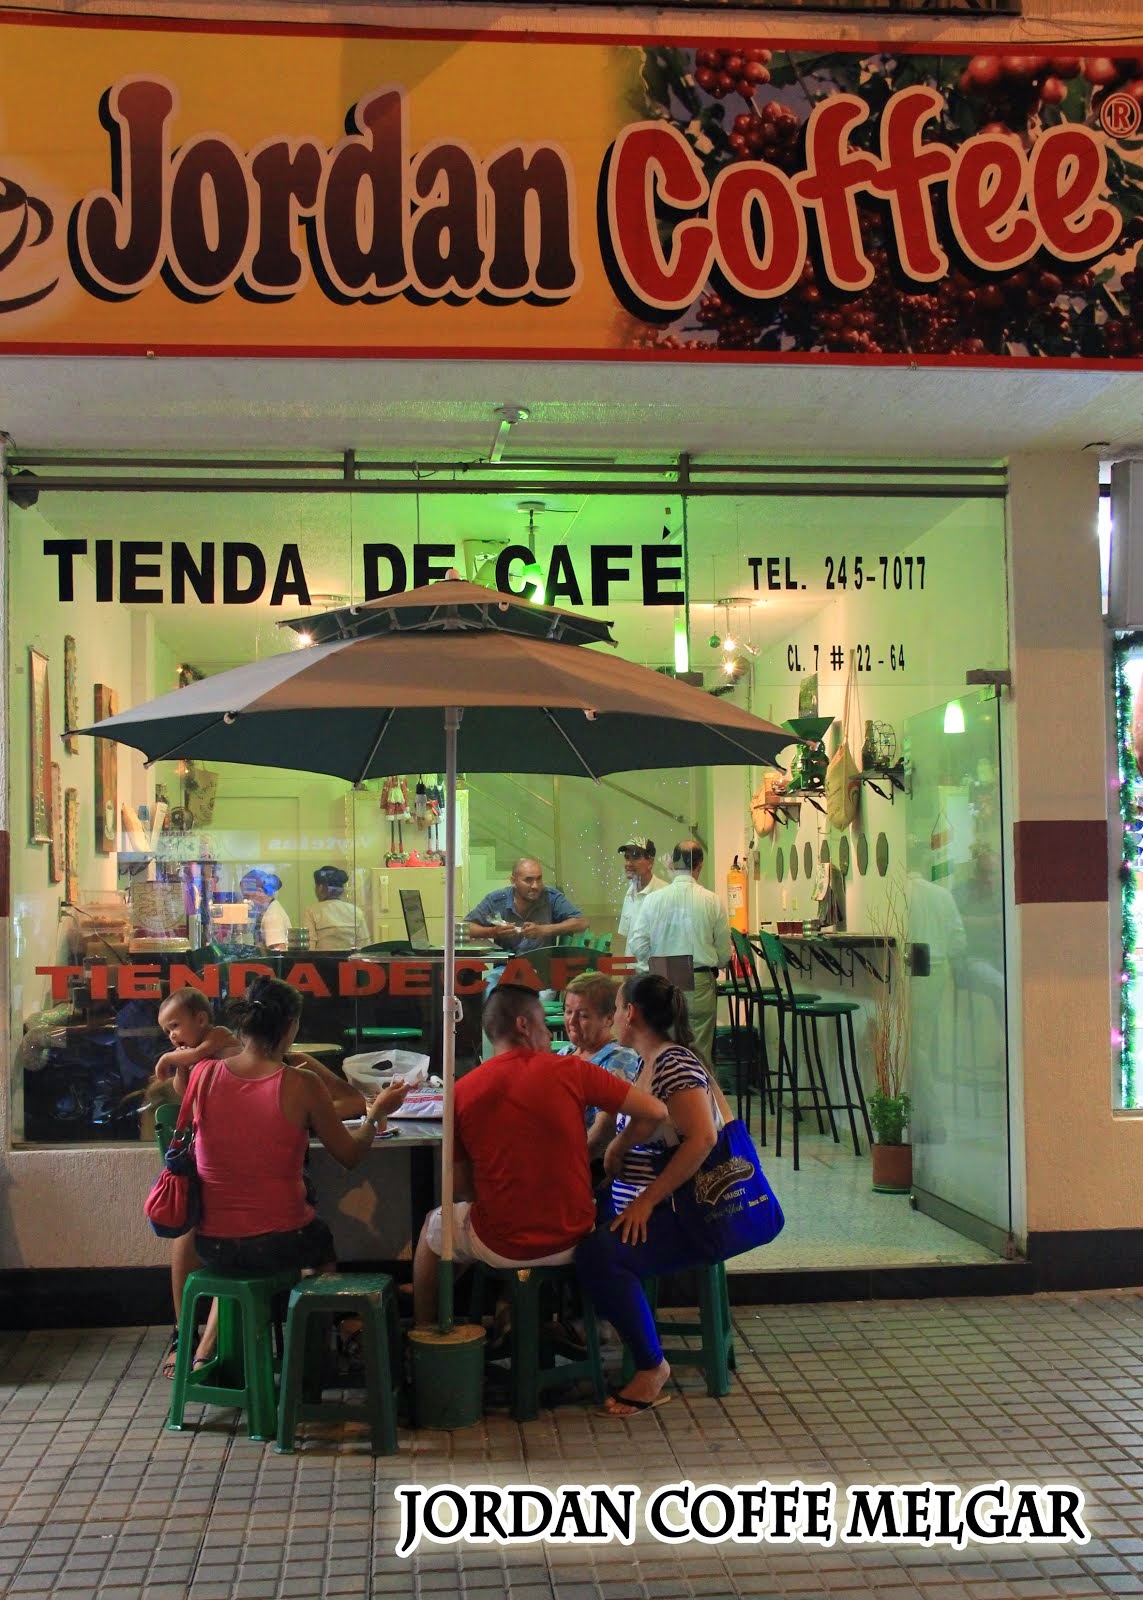 TIENDA DE CAFÉ "JORDAN COFFEE"